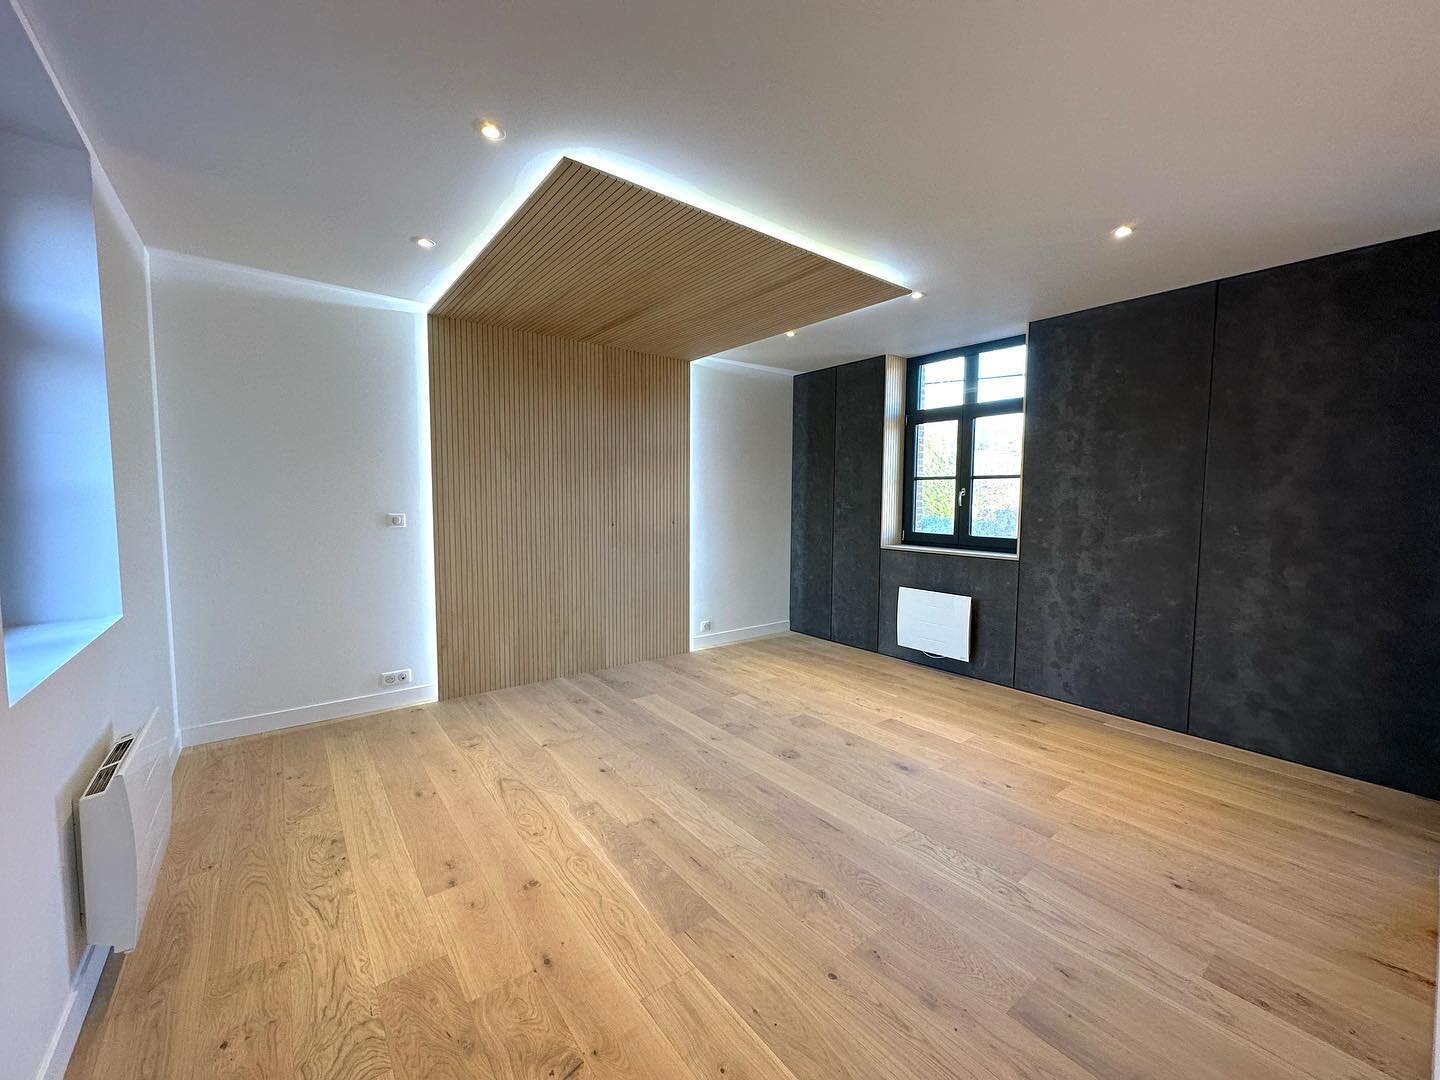 #renovation #prestige #loft #suiteparentale #salledebain #zen #briques #bois